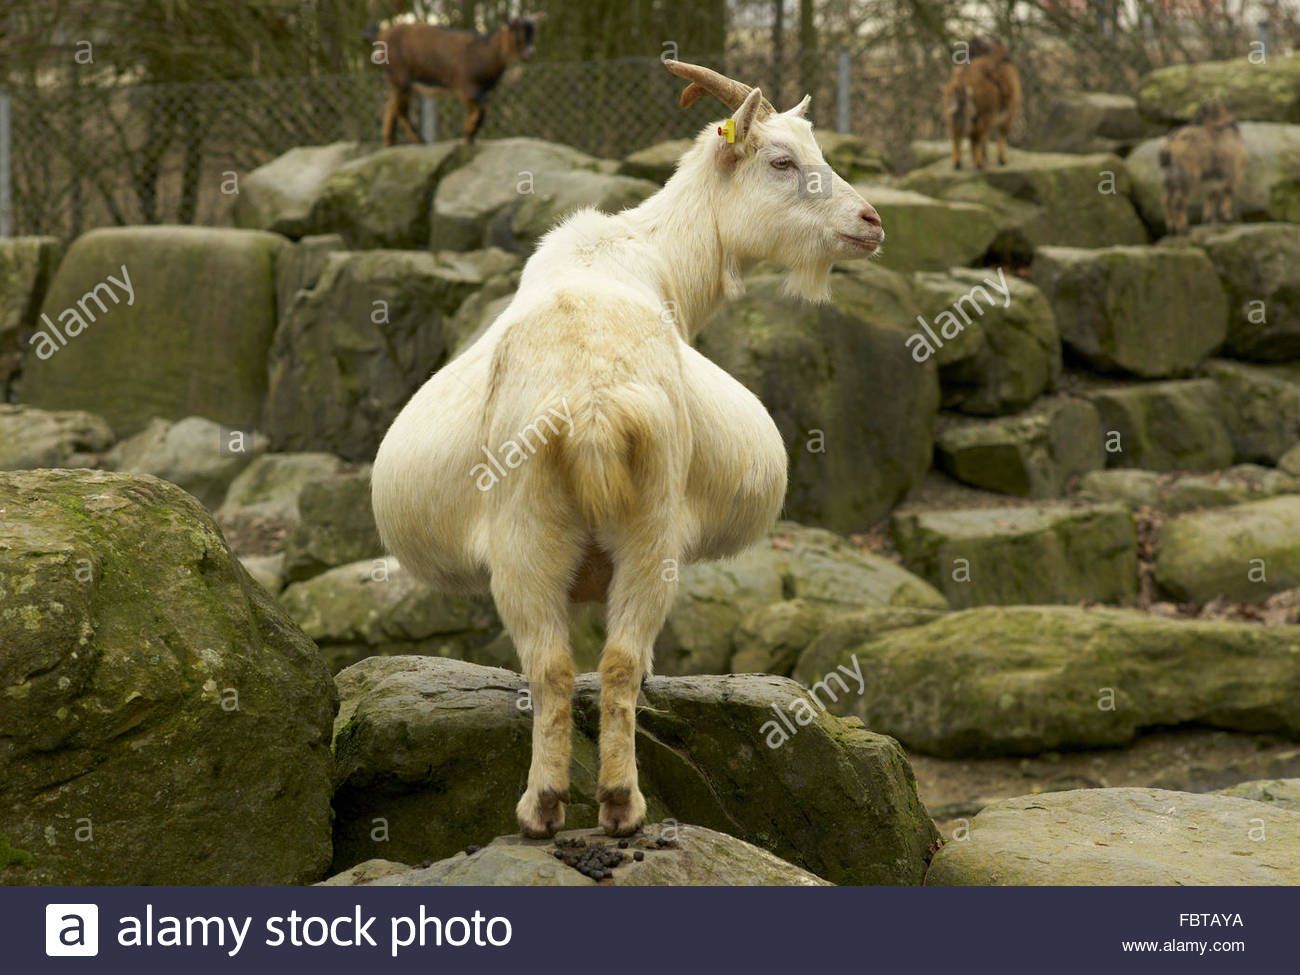 Lala reccomend Midget and goat